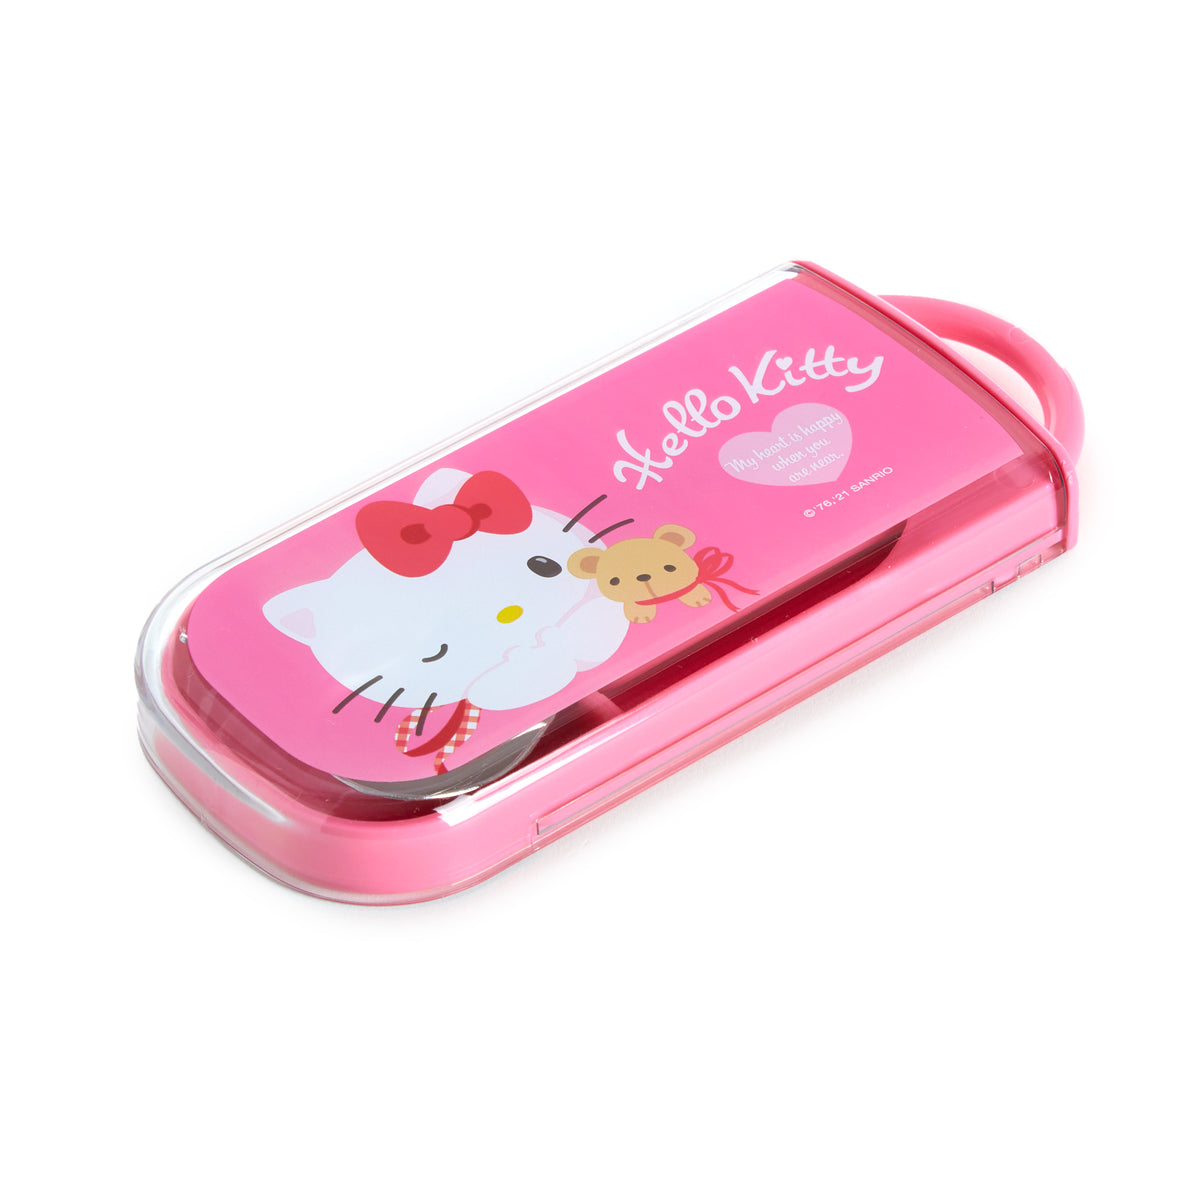 Hello Kitty Reusable Pocket Straw – Kitty Collection